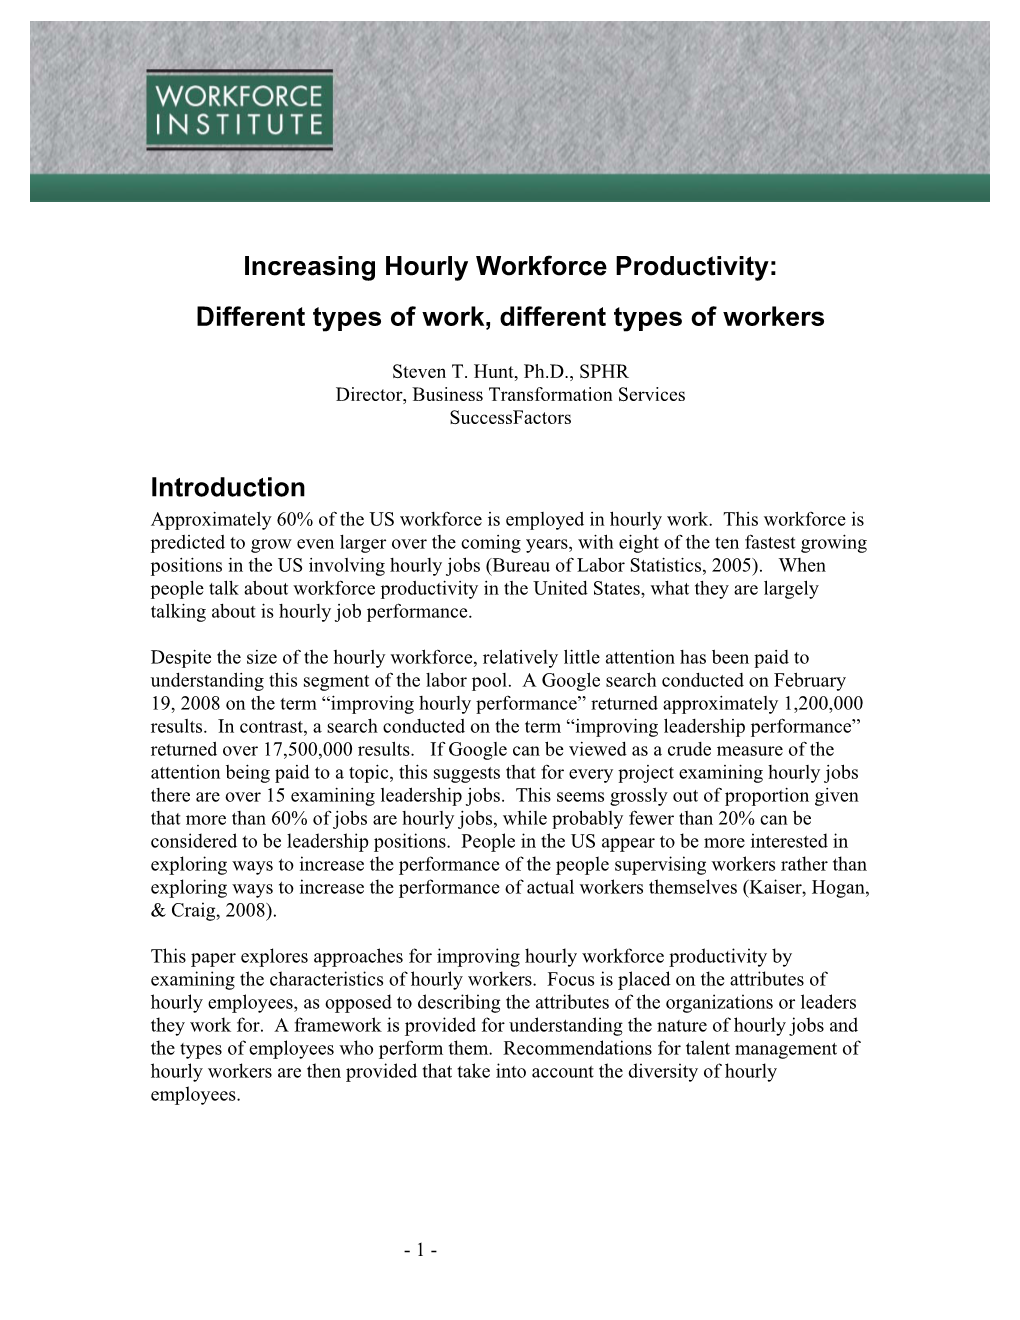 Increasing Hourly Workforce Productivity: Different Types of Work, Different Types of Workers